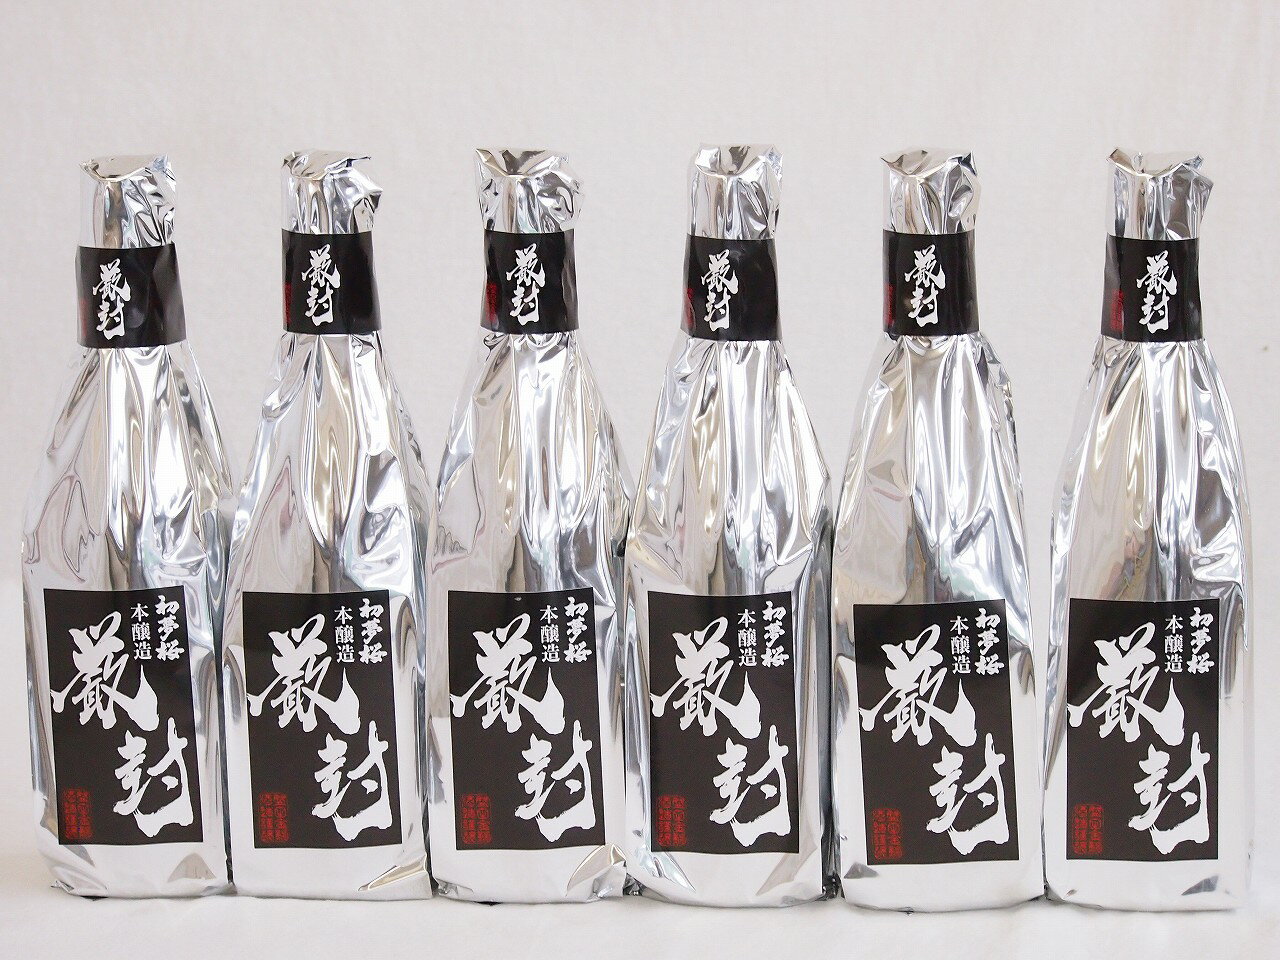 年に一度の限定日本酒6本セット(愛知県金鯱酒造 初夢桜 厳封本醸造) 720ml×6本